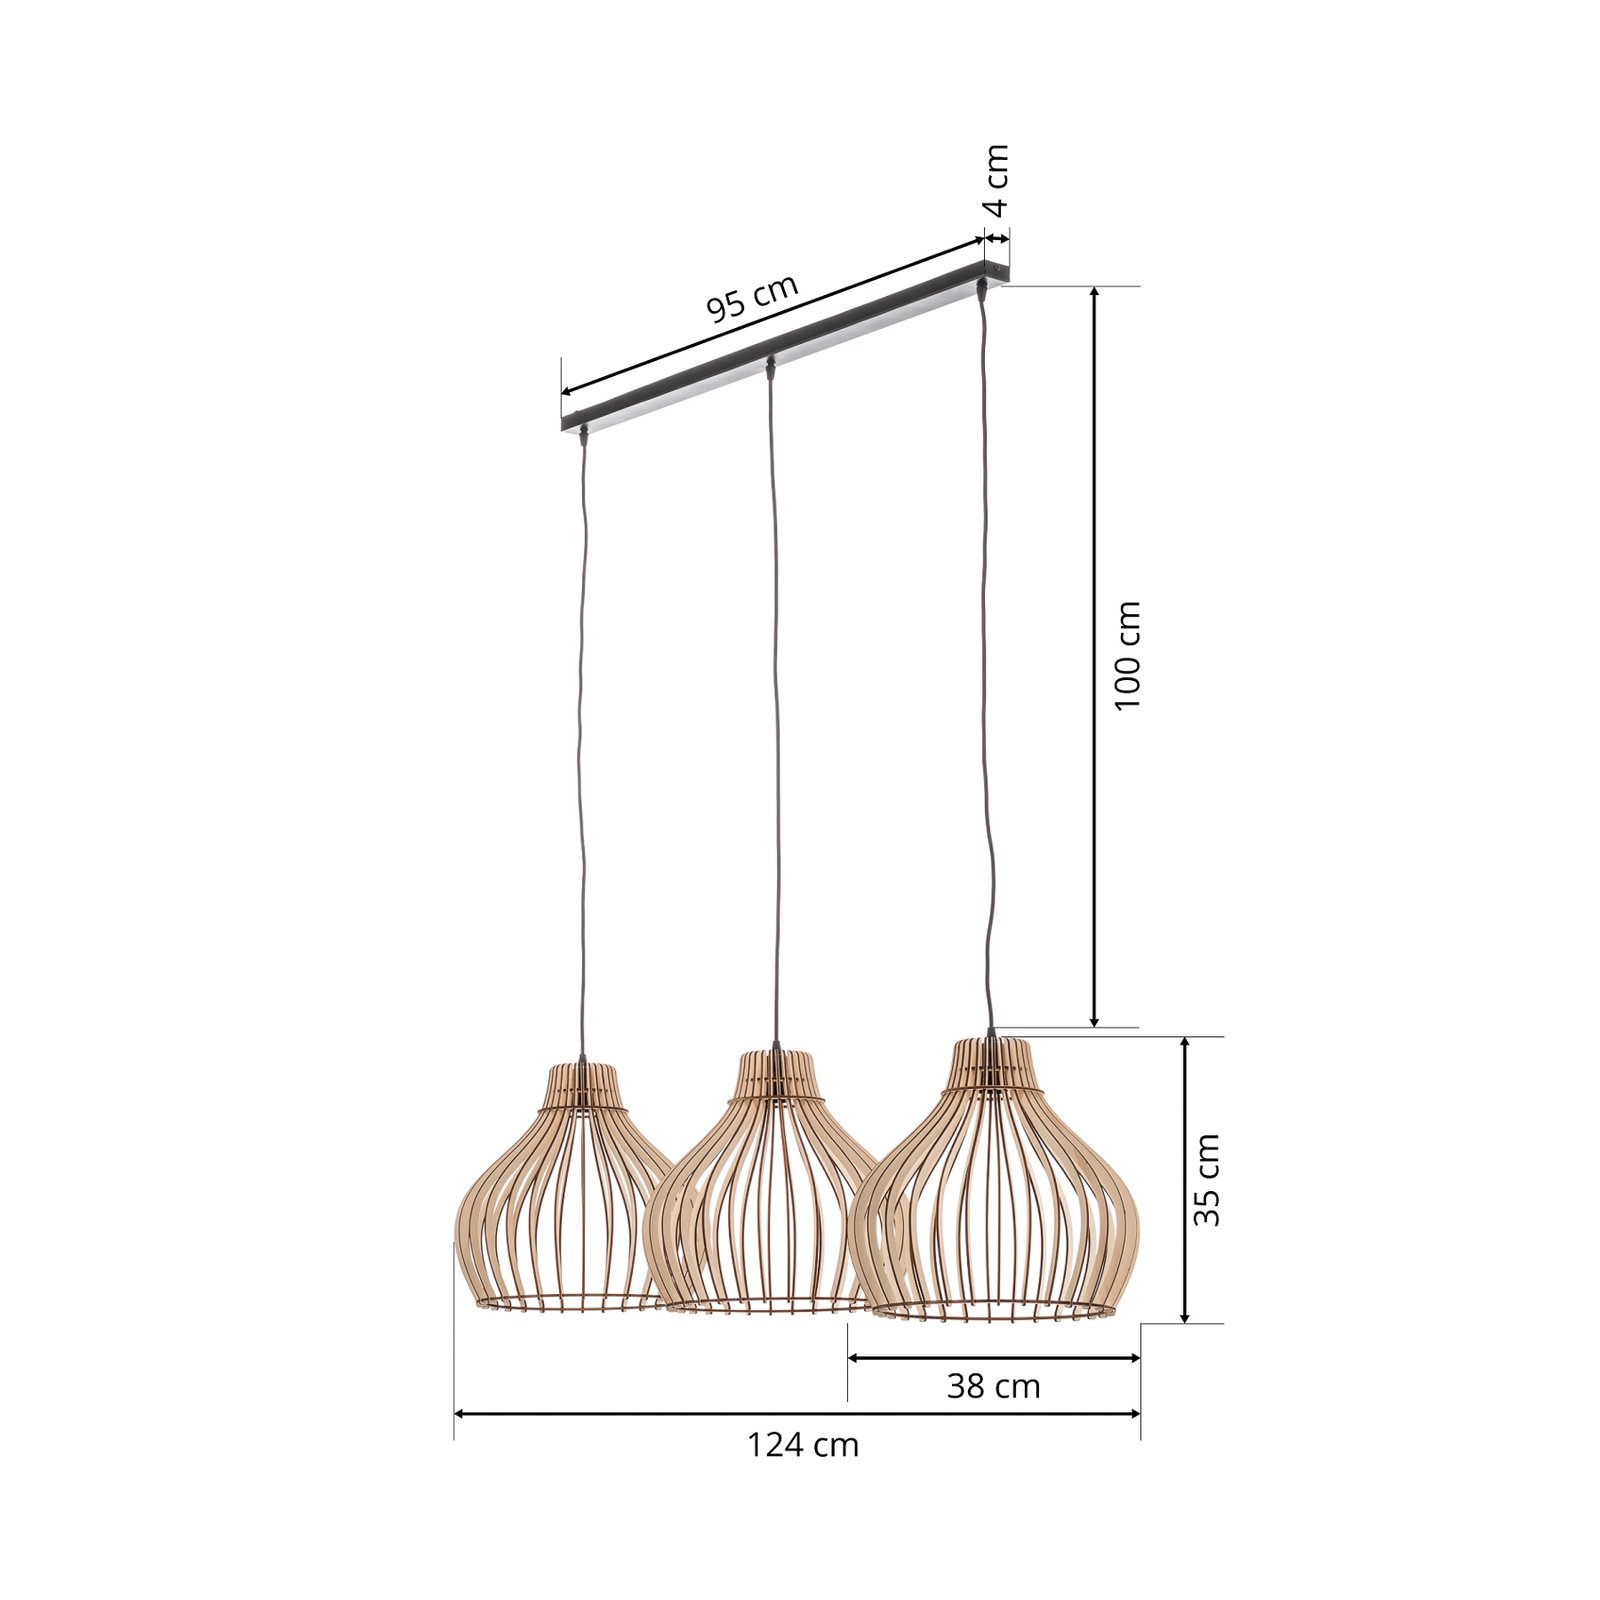 Barrel hanging light wood lampshades 3-bulb long